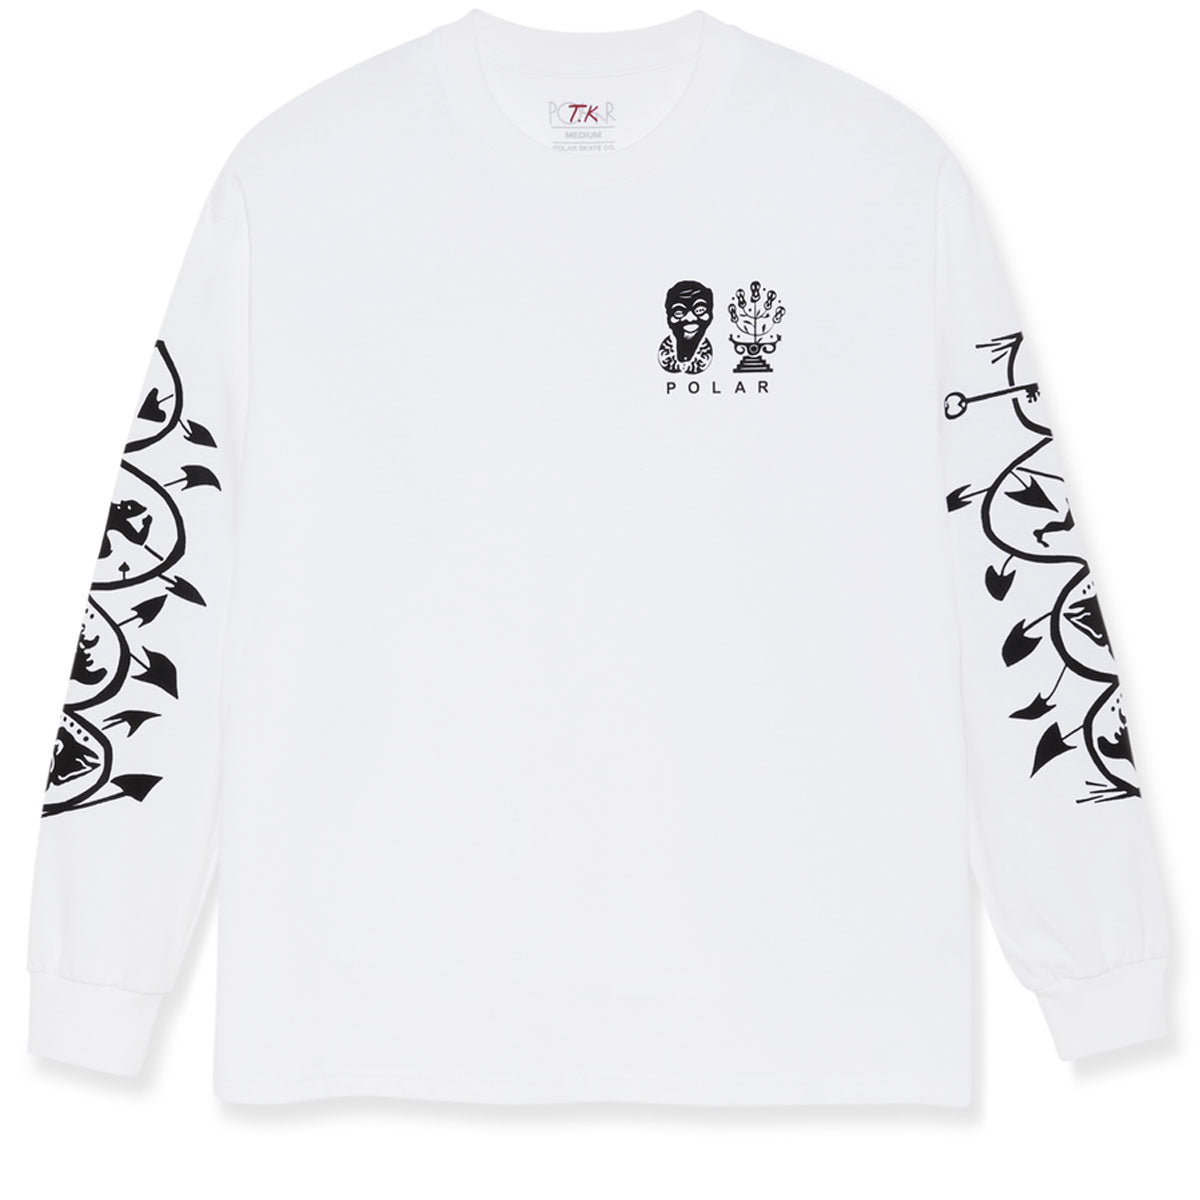 Polar Spiral Long Sleeve T-Shirt - White image 1